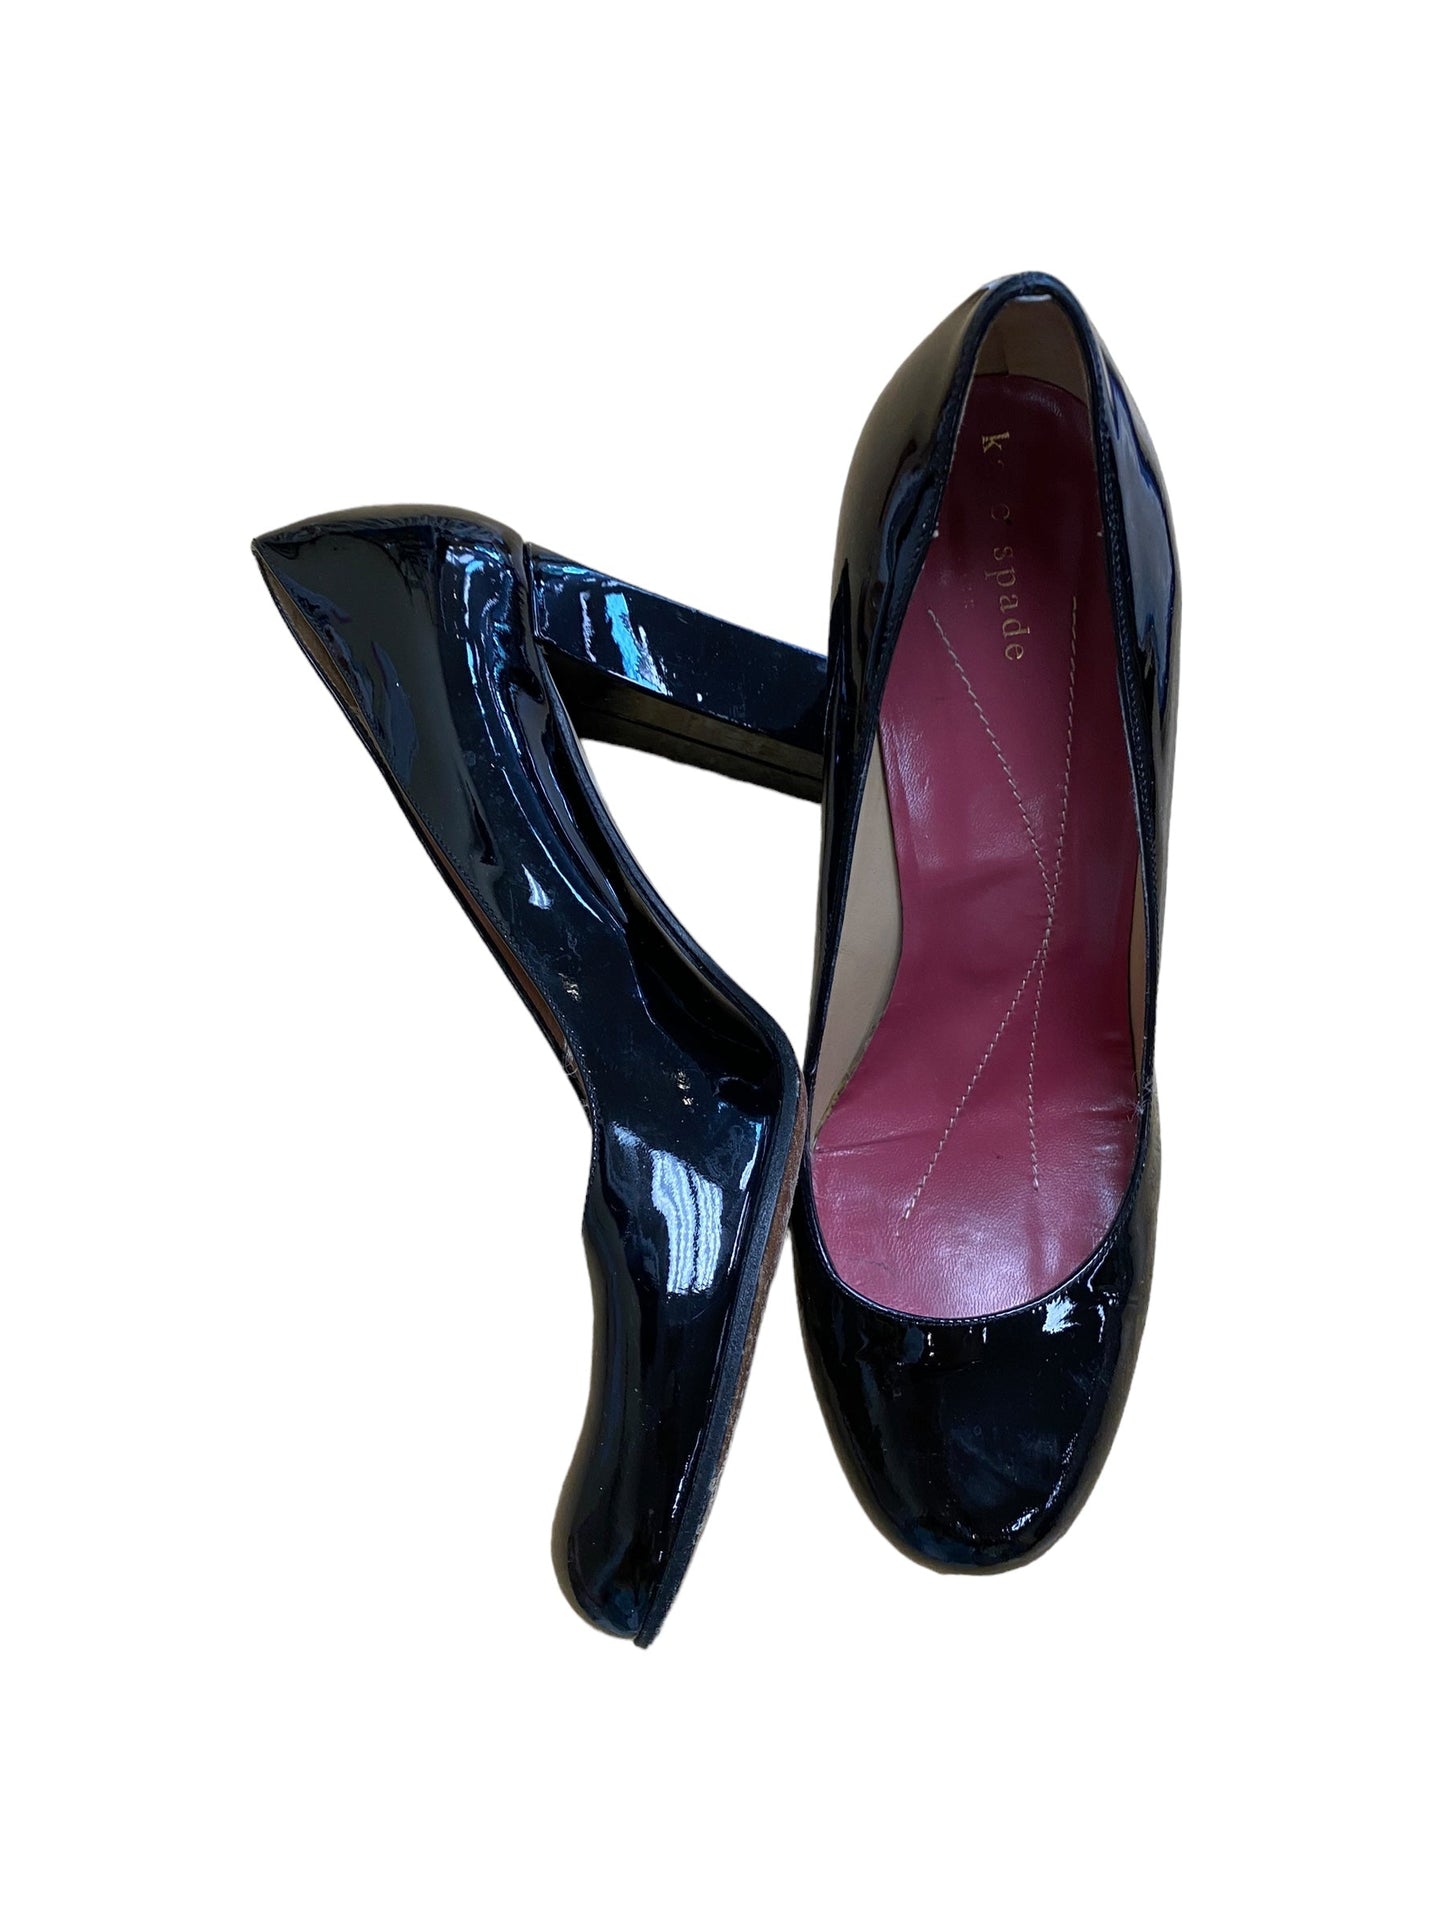 Black Shoes Heels Block Kate Spade, Size 9.5